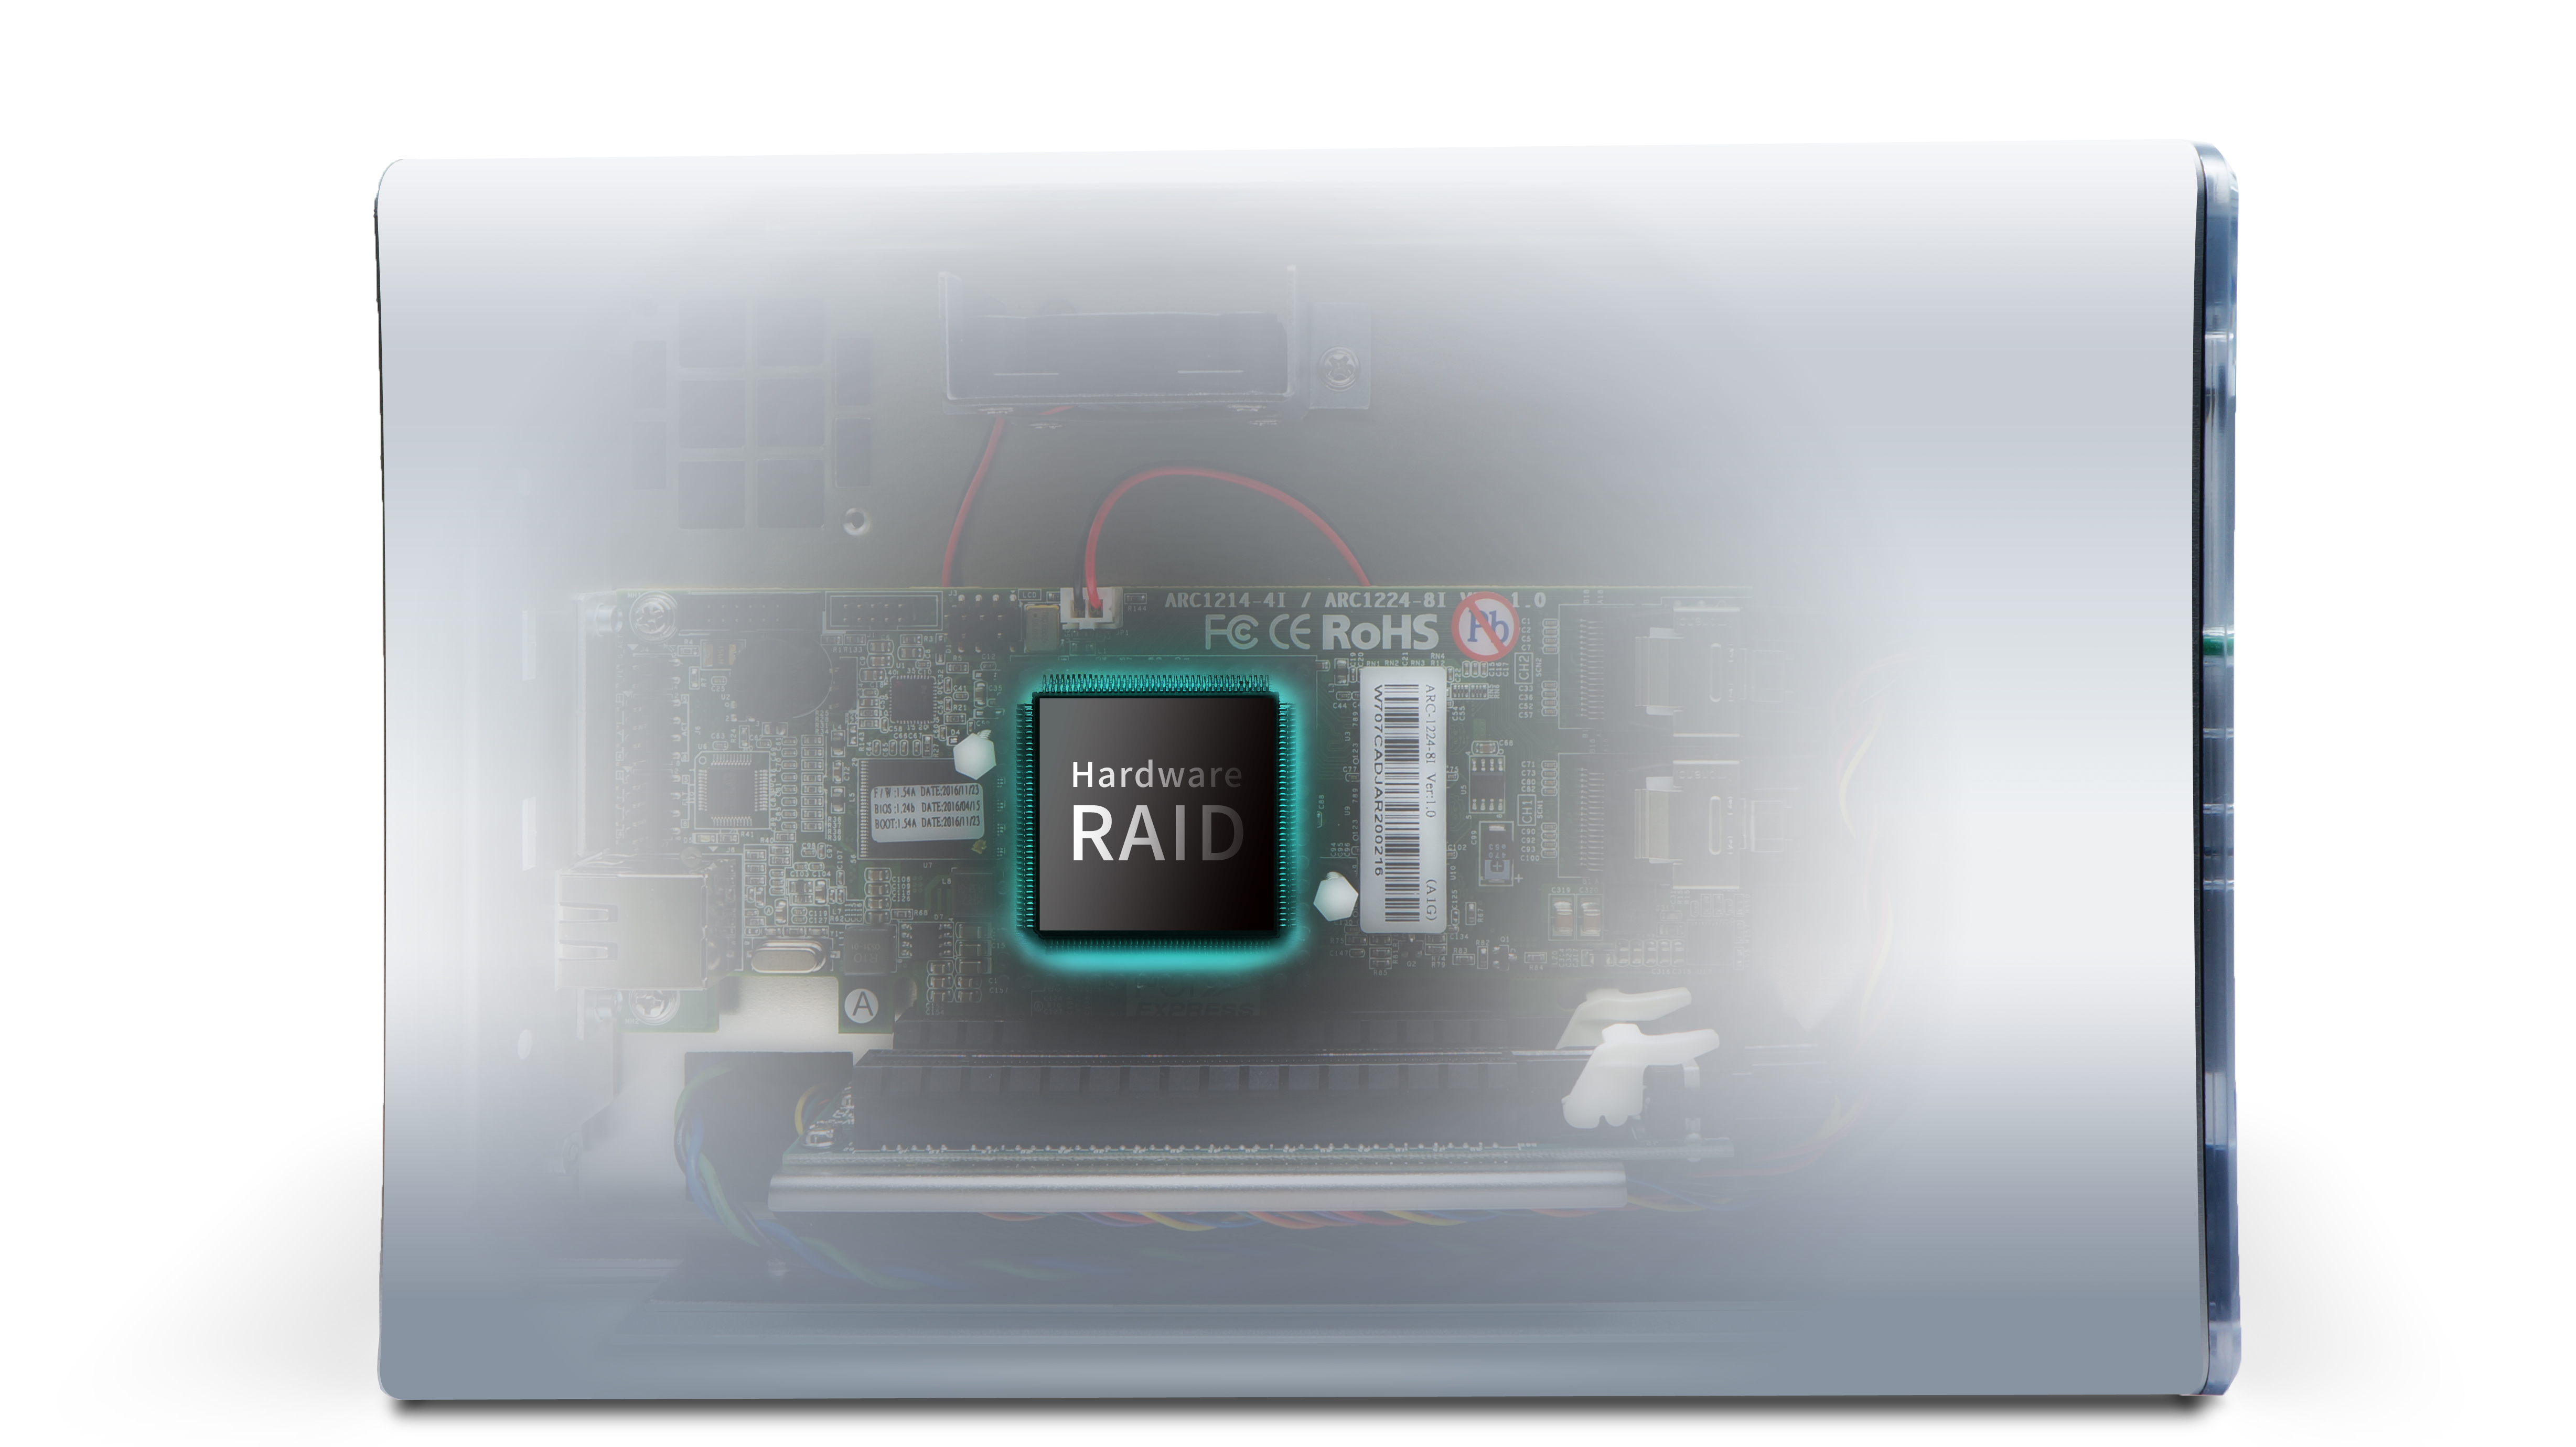 Thunderbolt 3 RAID storage – NA762TB3 with hardware RAID controller